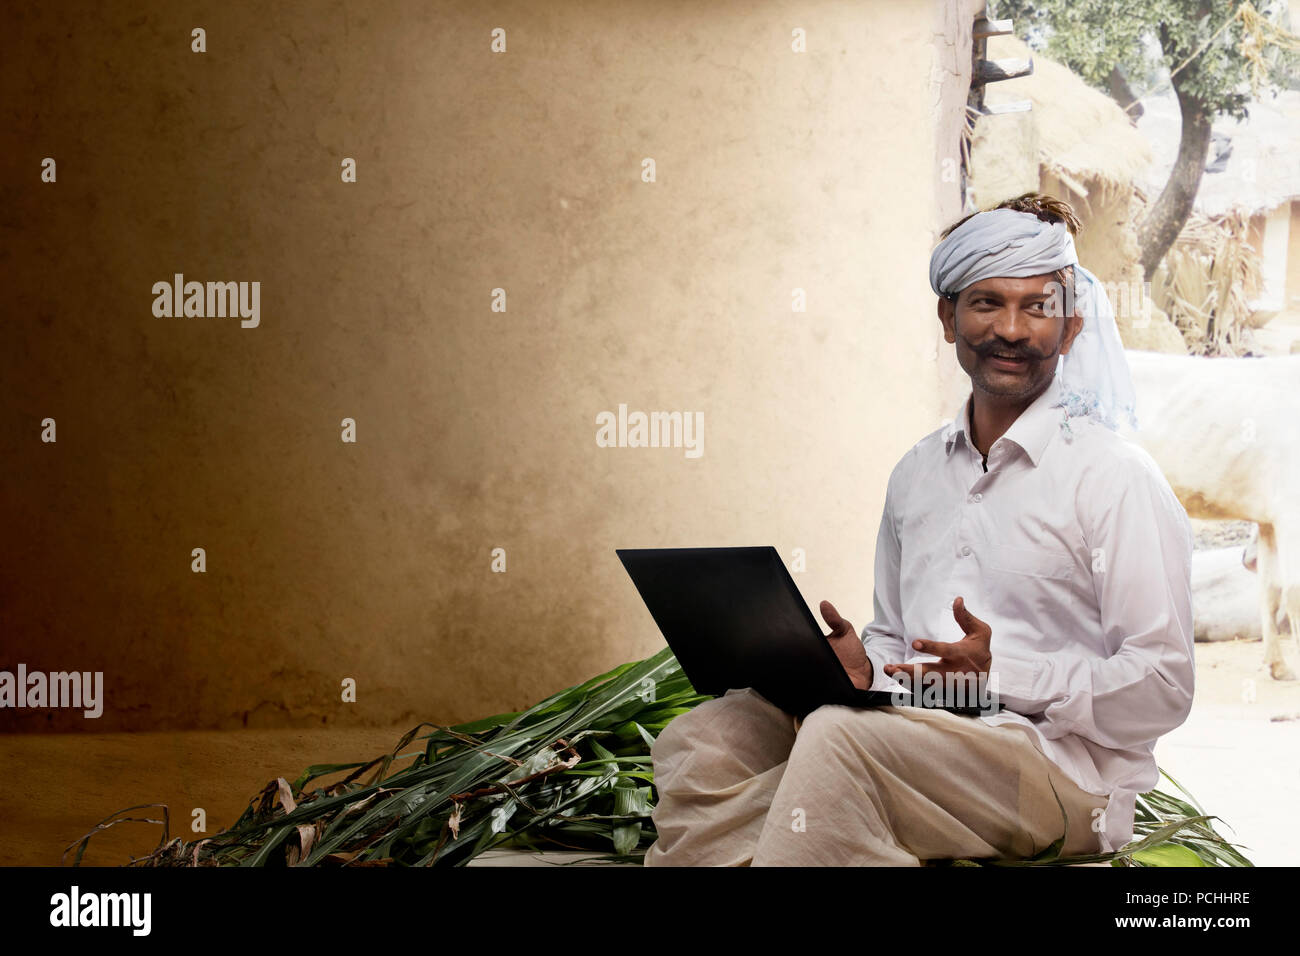 Indian rural farmer using laptop Stock Photo